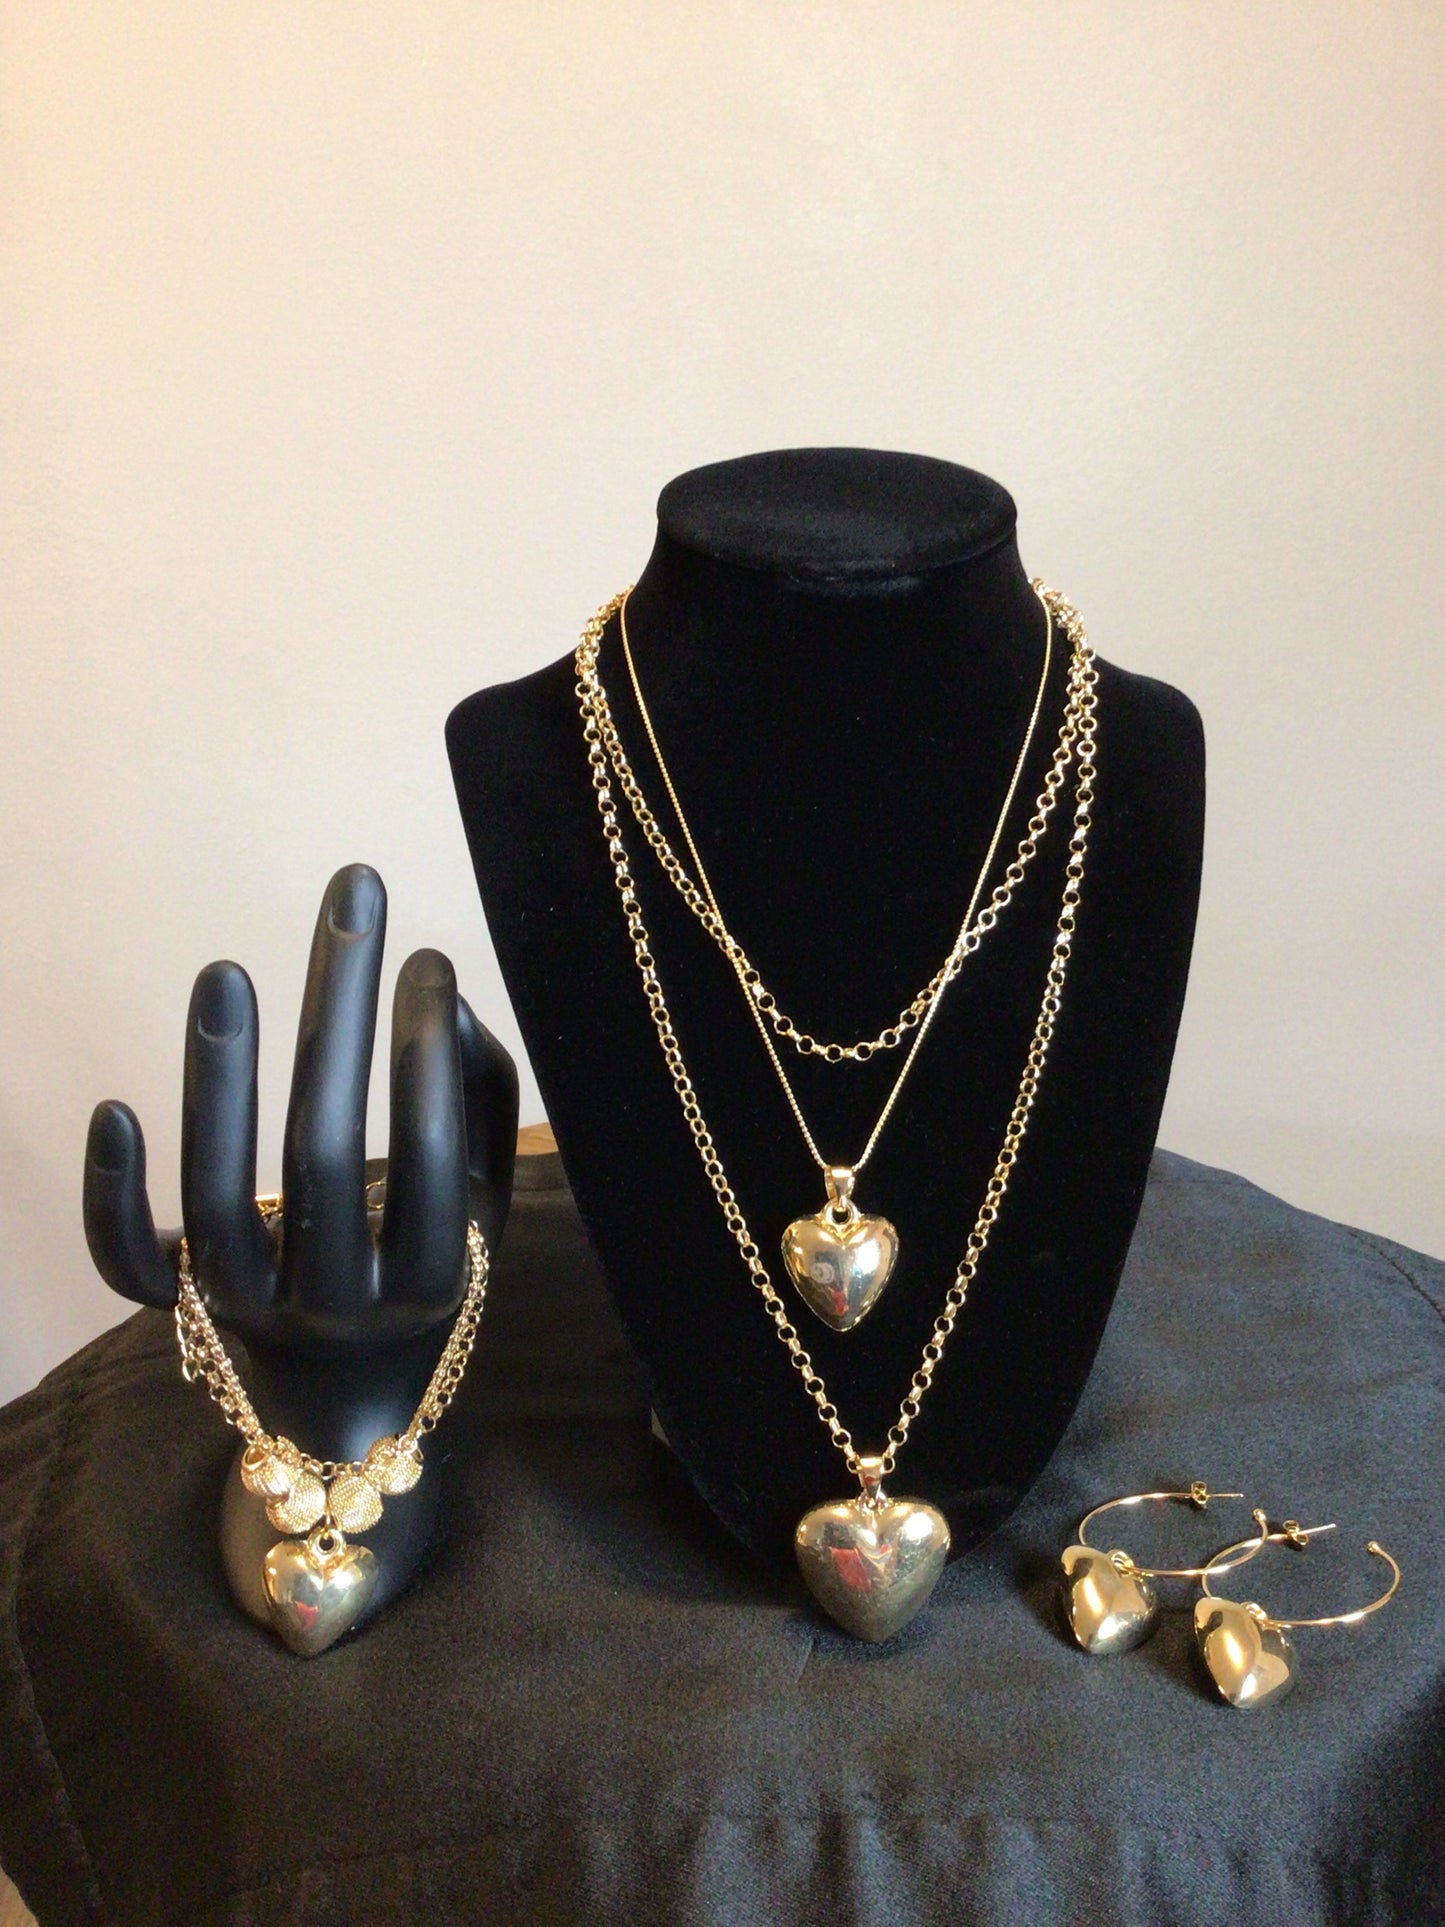 Jewelry - Gold heart jewelry set includes: Gold heart 3 chain necklace, 2 chain bracelet. heart earrings.